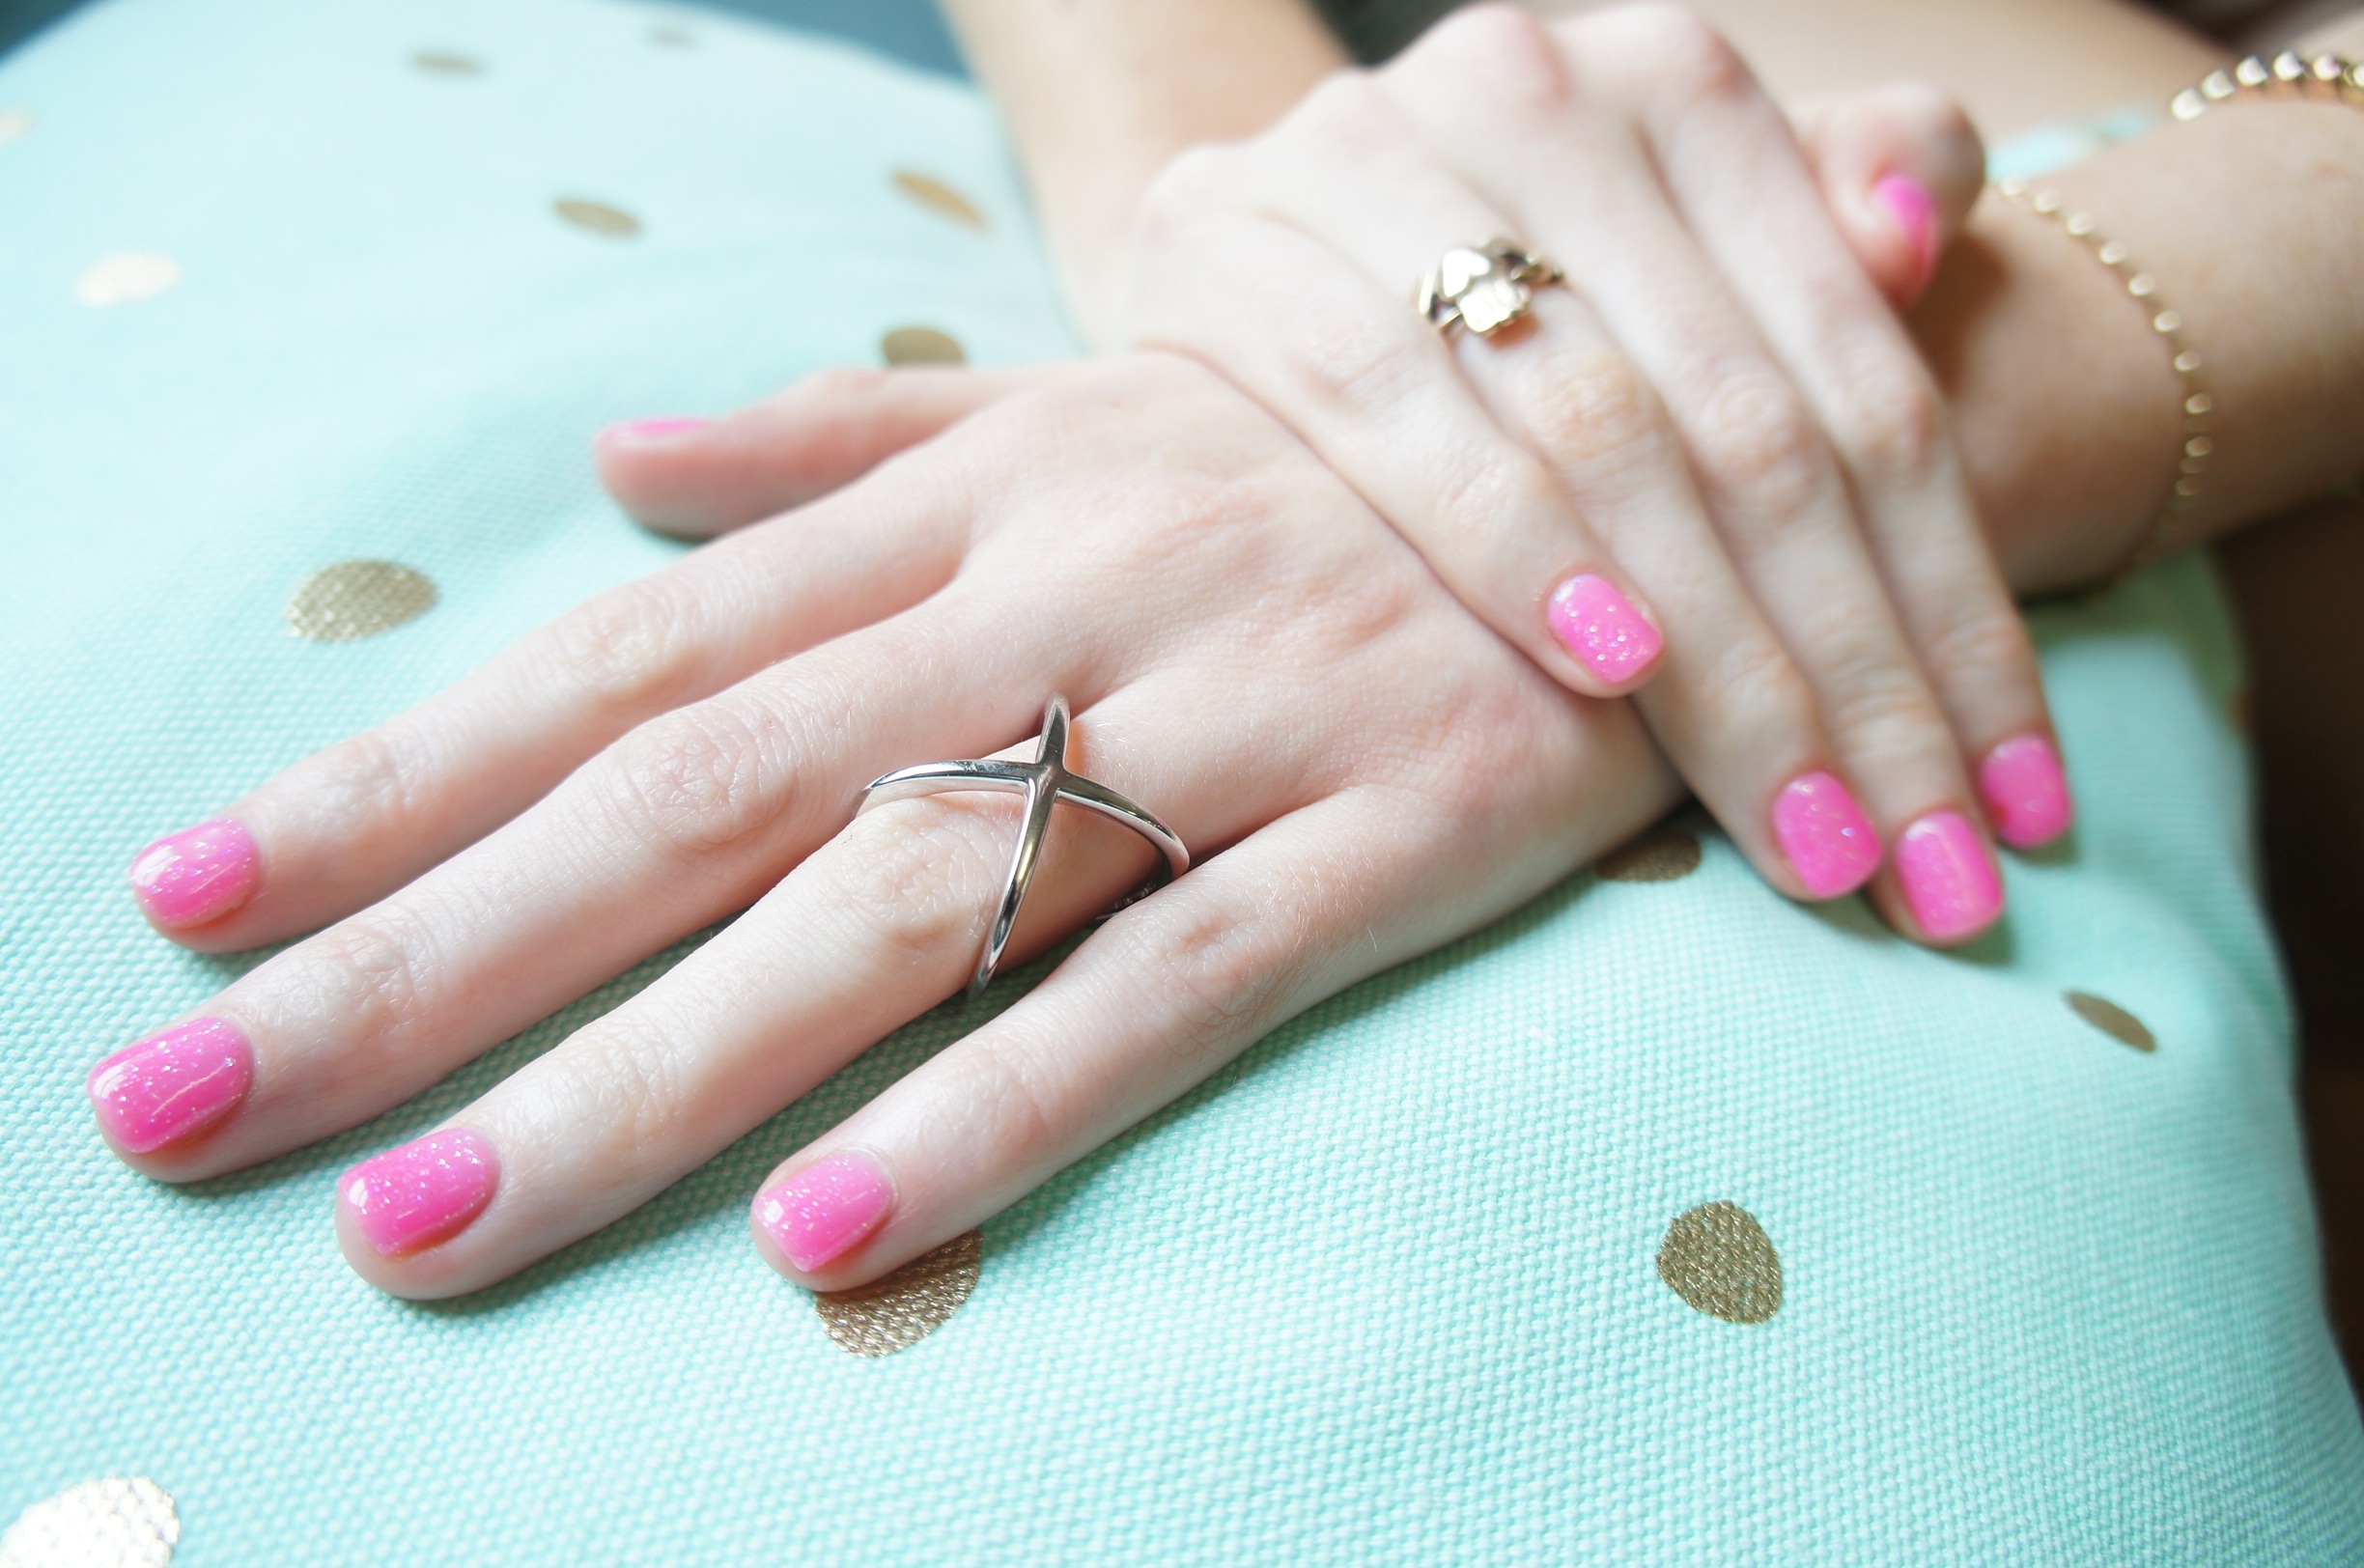 pink manicure